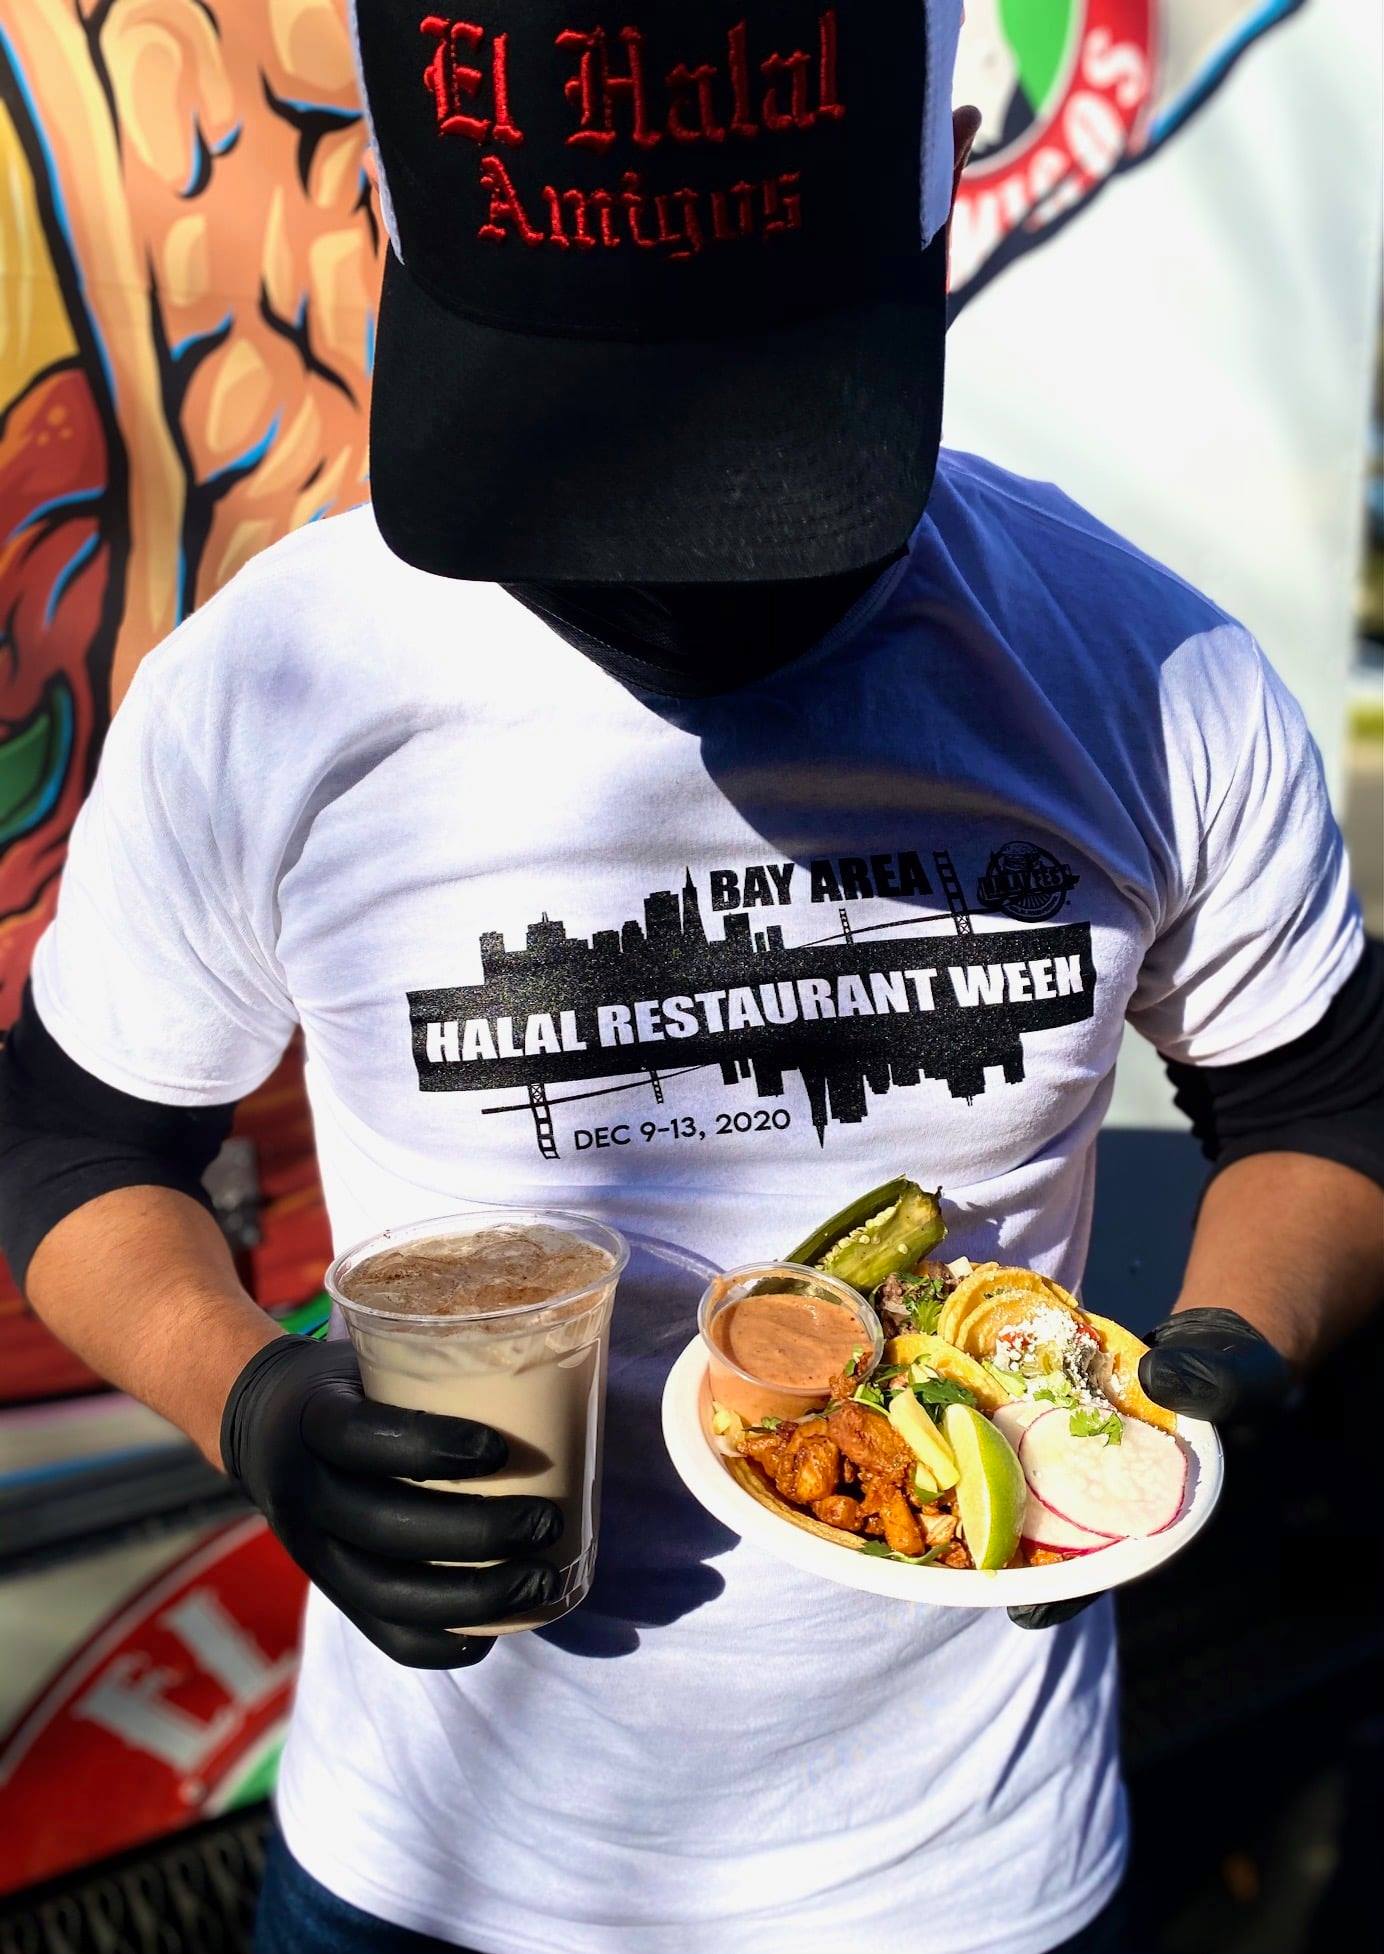 Halal Restaurant Week serves up socially-distanced goodies through